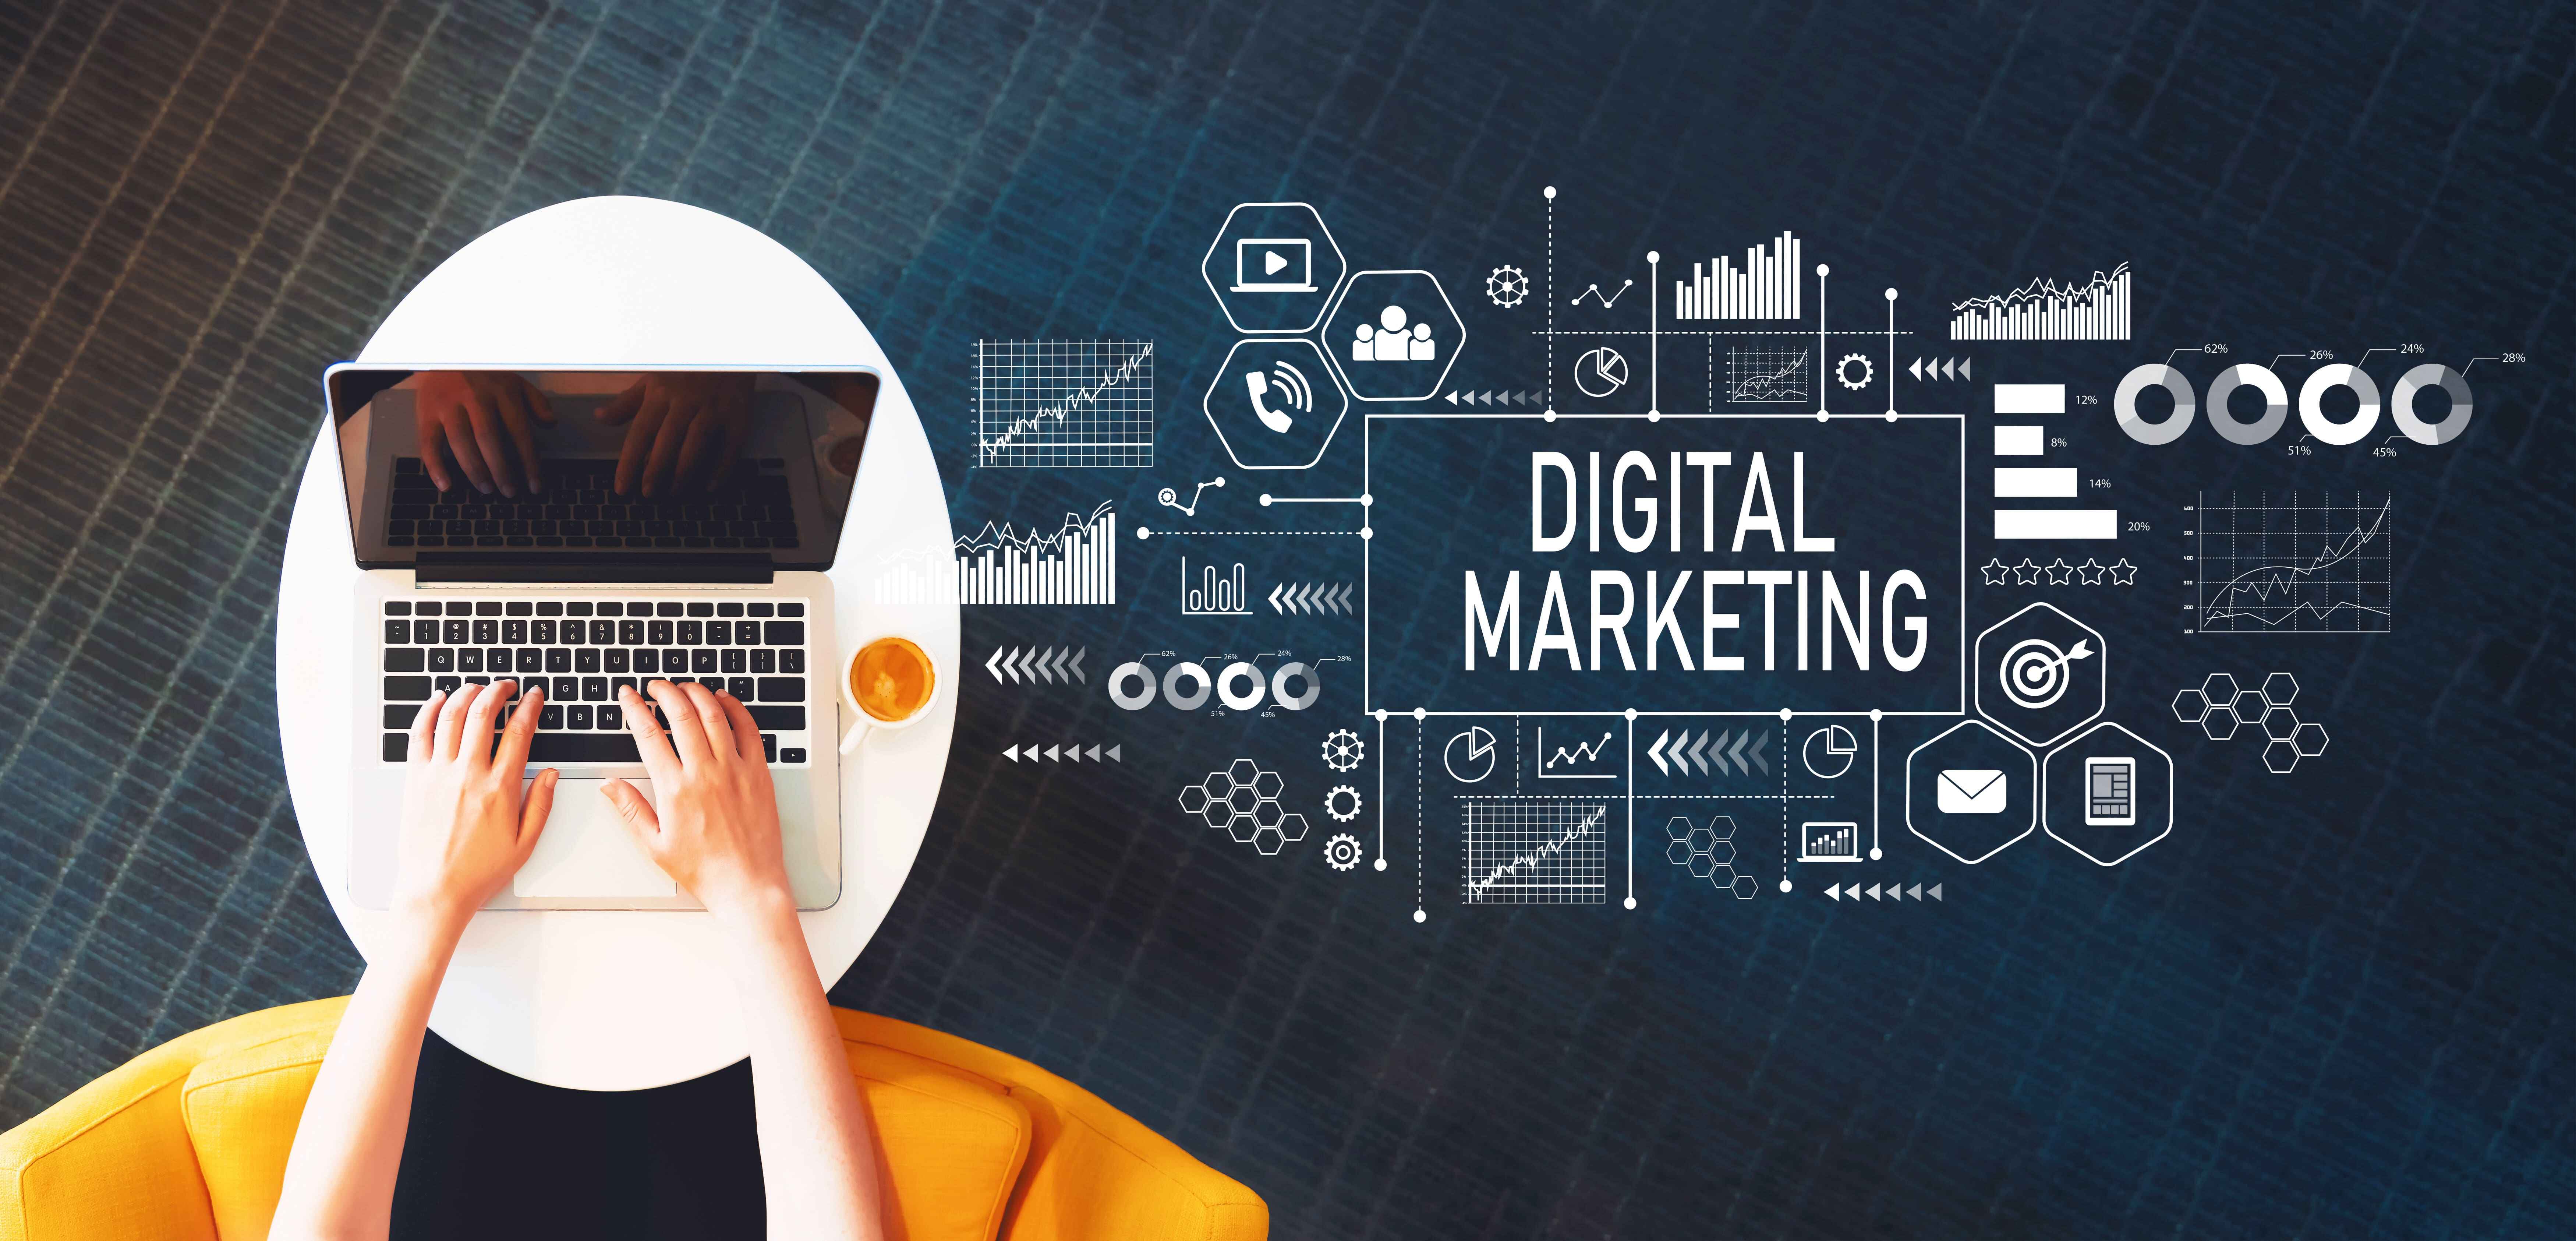 digital_marketing,diwise,di-wise,Di-wise,Diwise,dwise,Dwise,d-wise,D-wise,PR,Pragency,prmarketing,digitalmarketing,marketingagency,company,socialmediacompnay,digimarketing